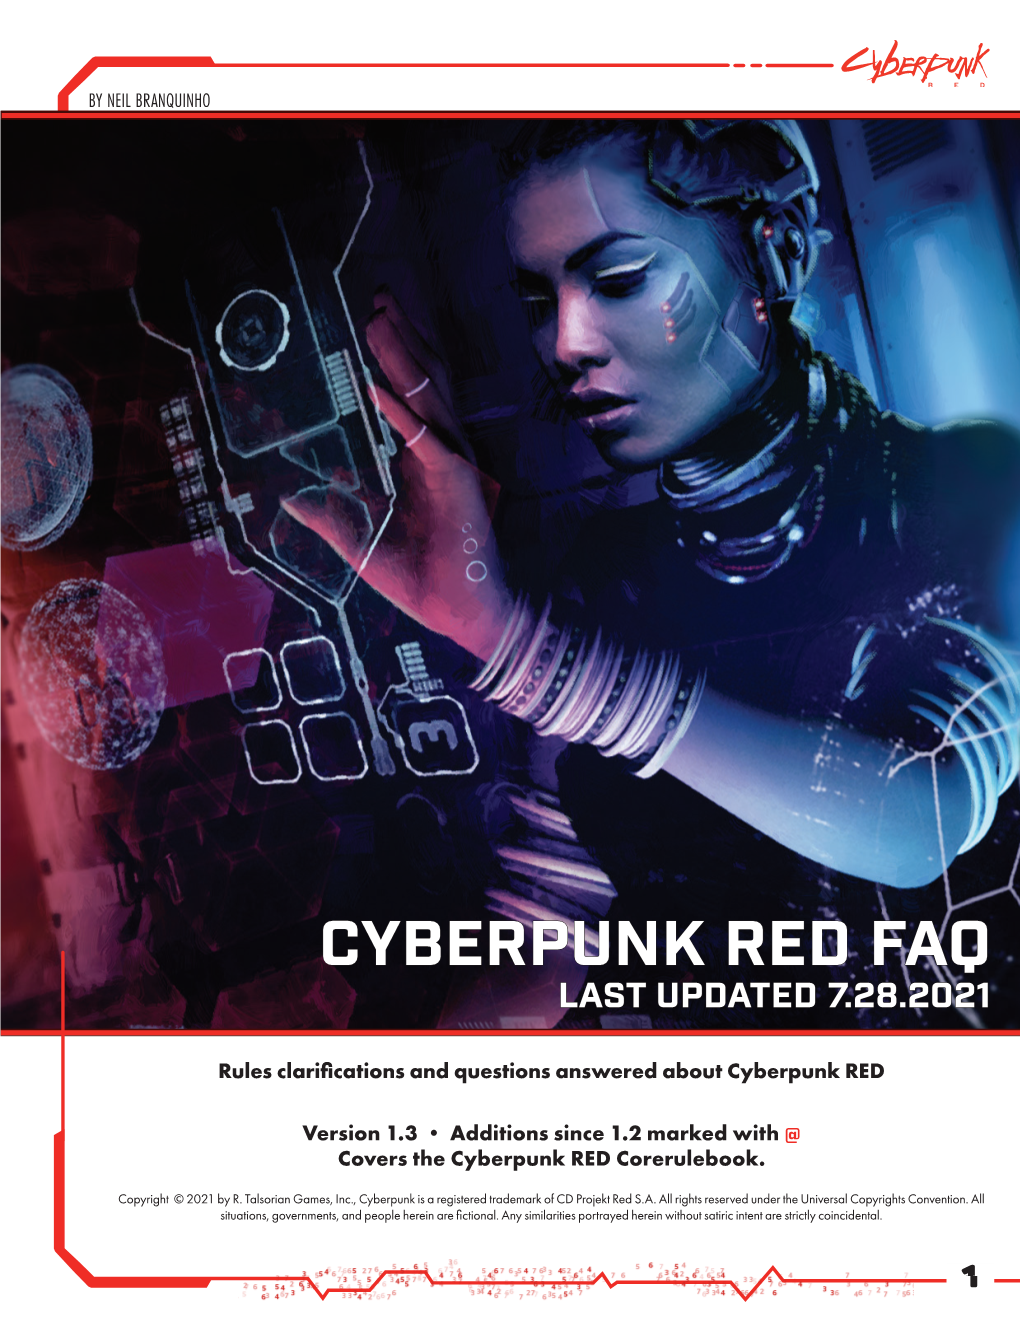 The Cyberpunk RED Rules